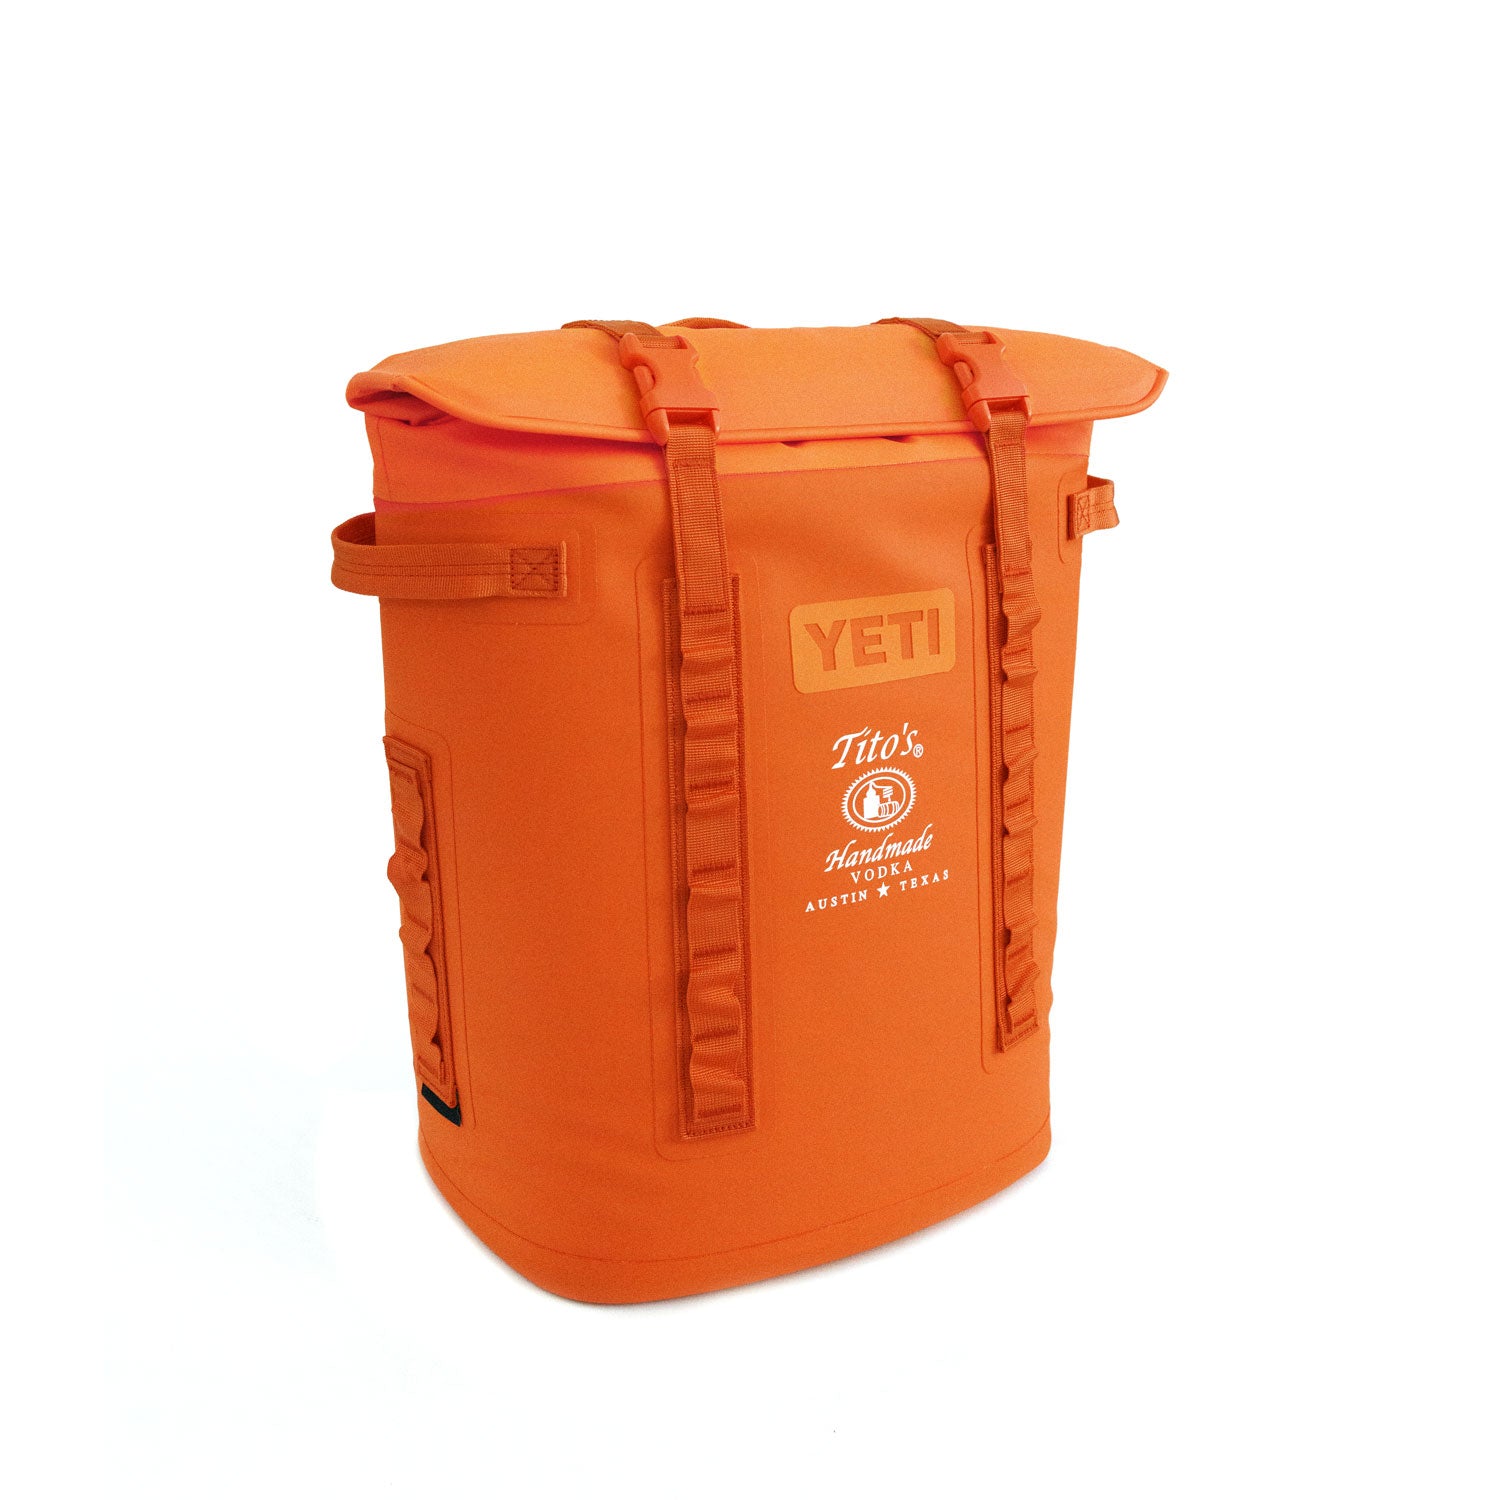 Front of Orange YETI Hopper® M20 Soft Cooler Backpack with Tito's Handmade Vodka logo